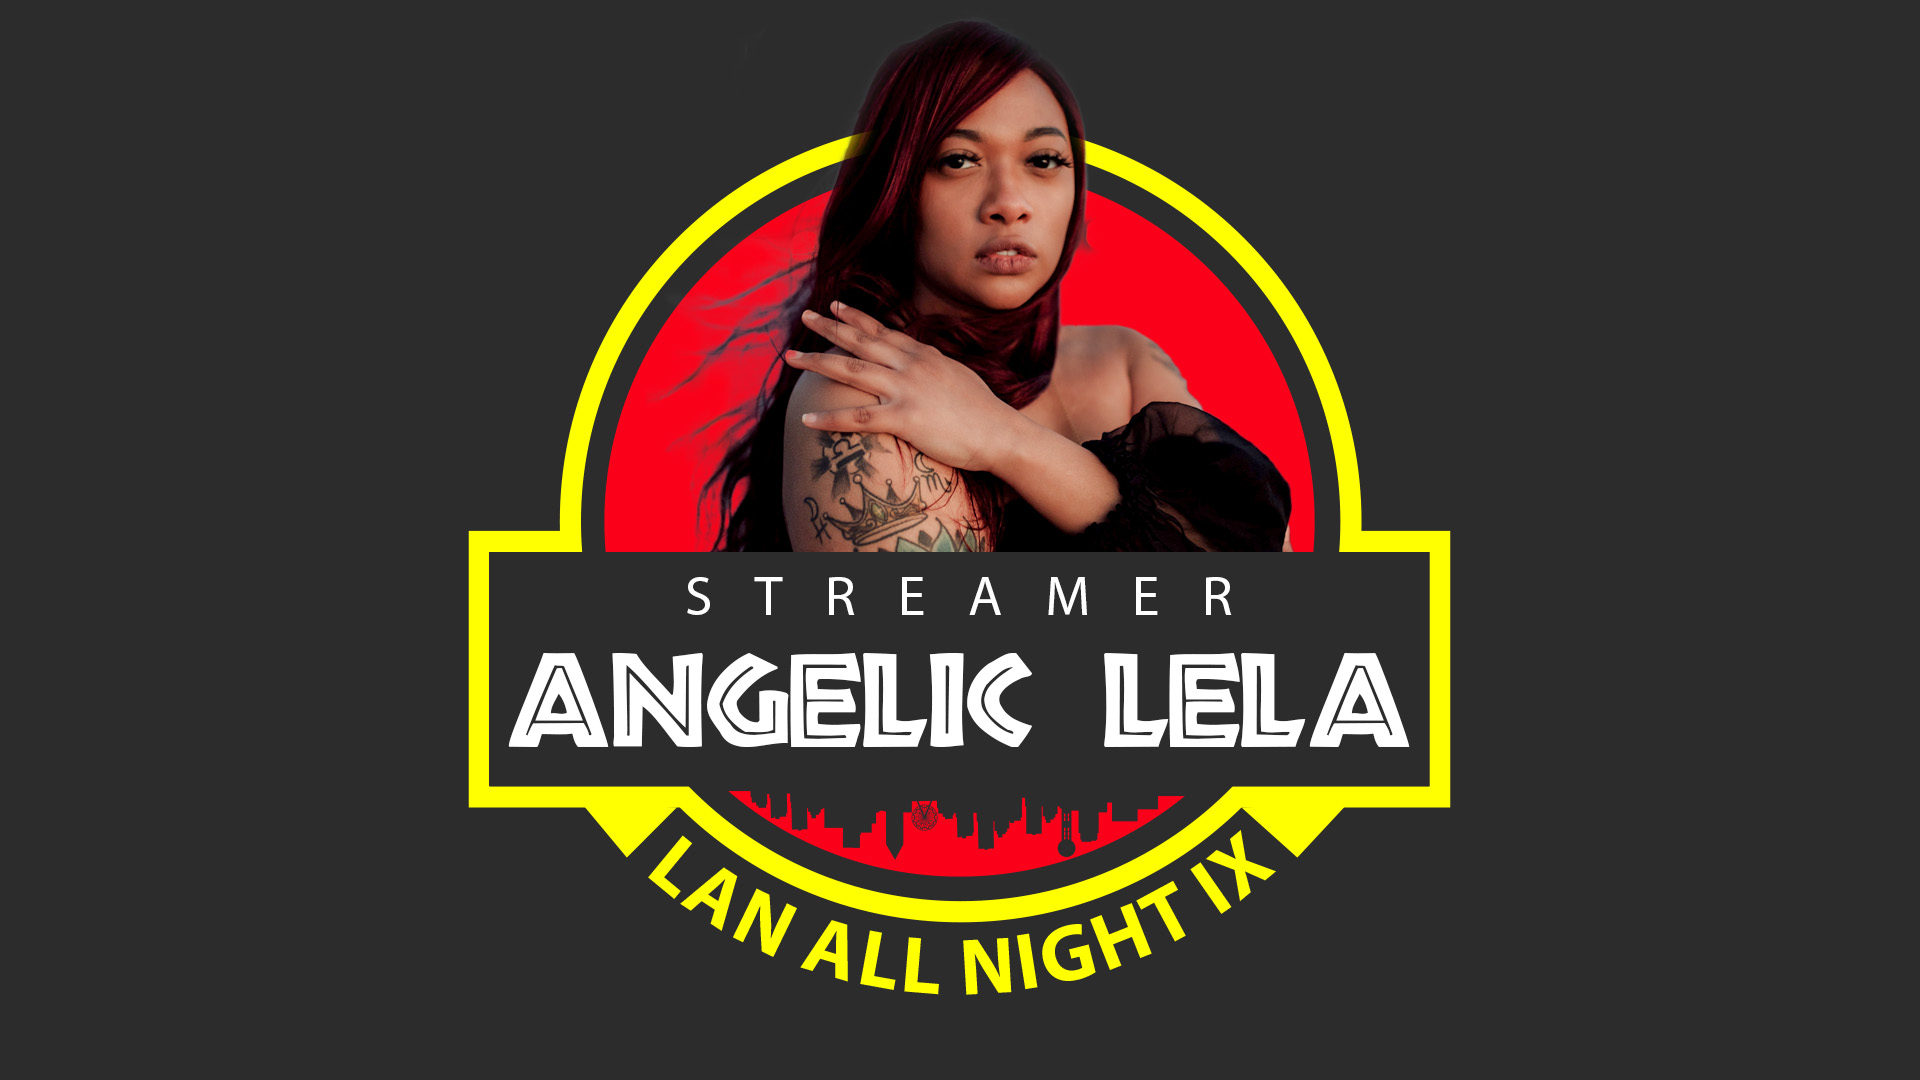 Streamer - Angelic Lela